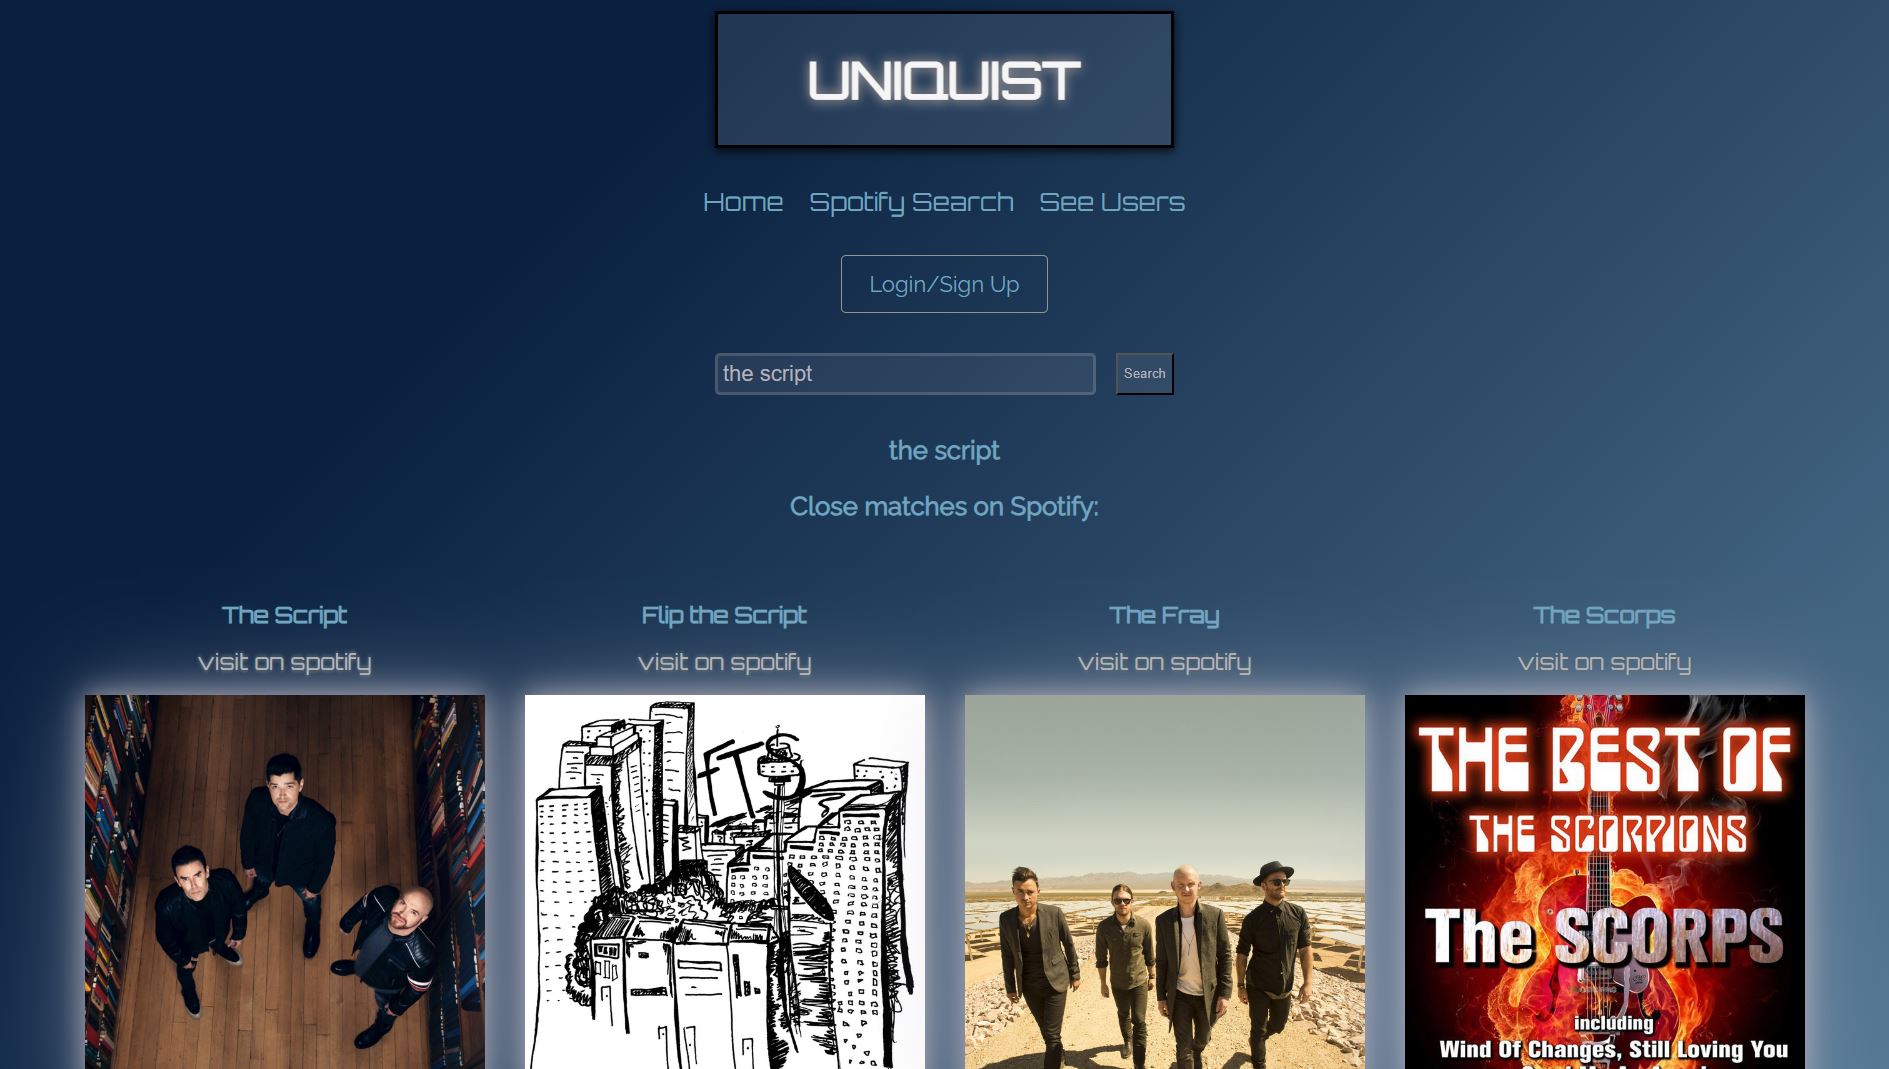 uniquist-spotify-search.JPG